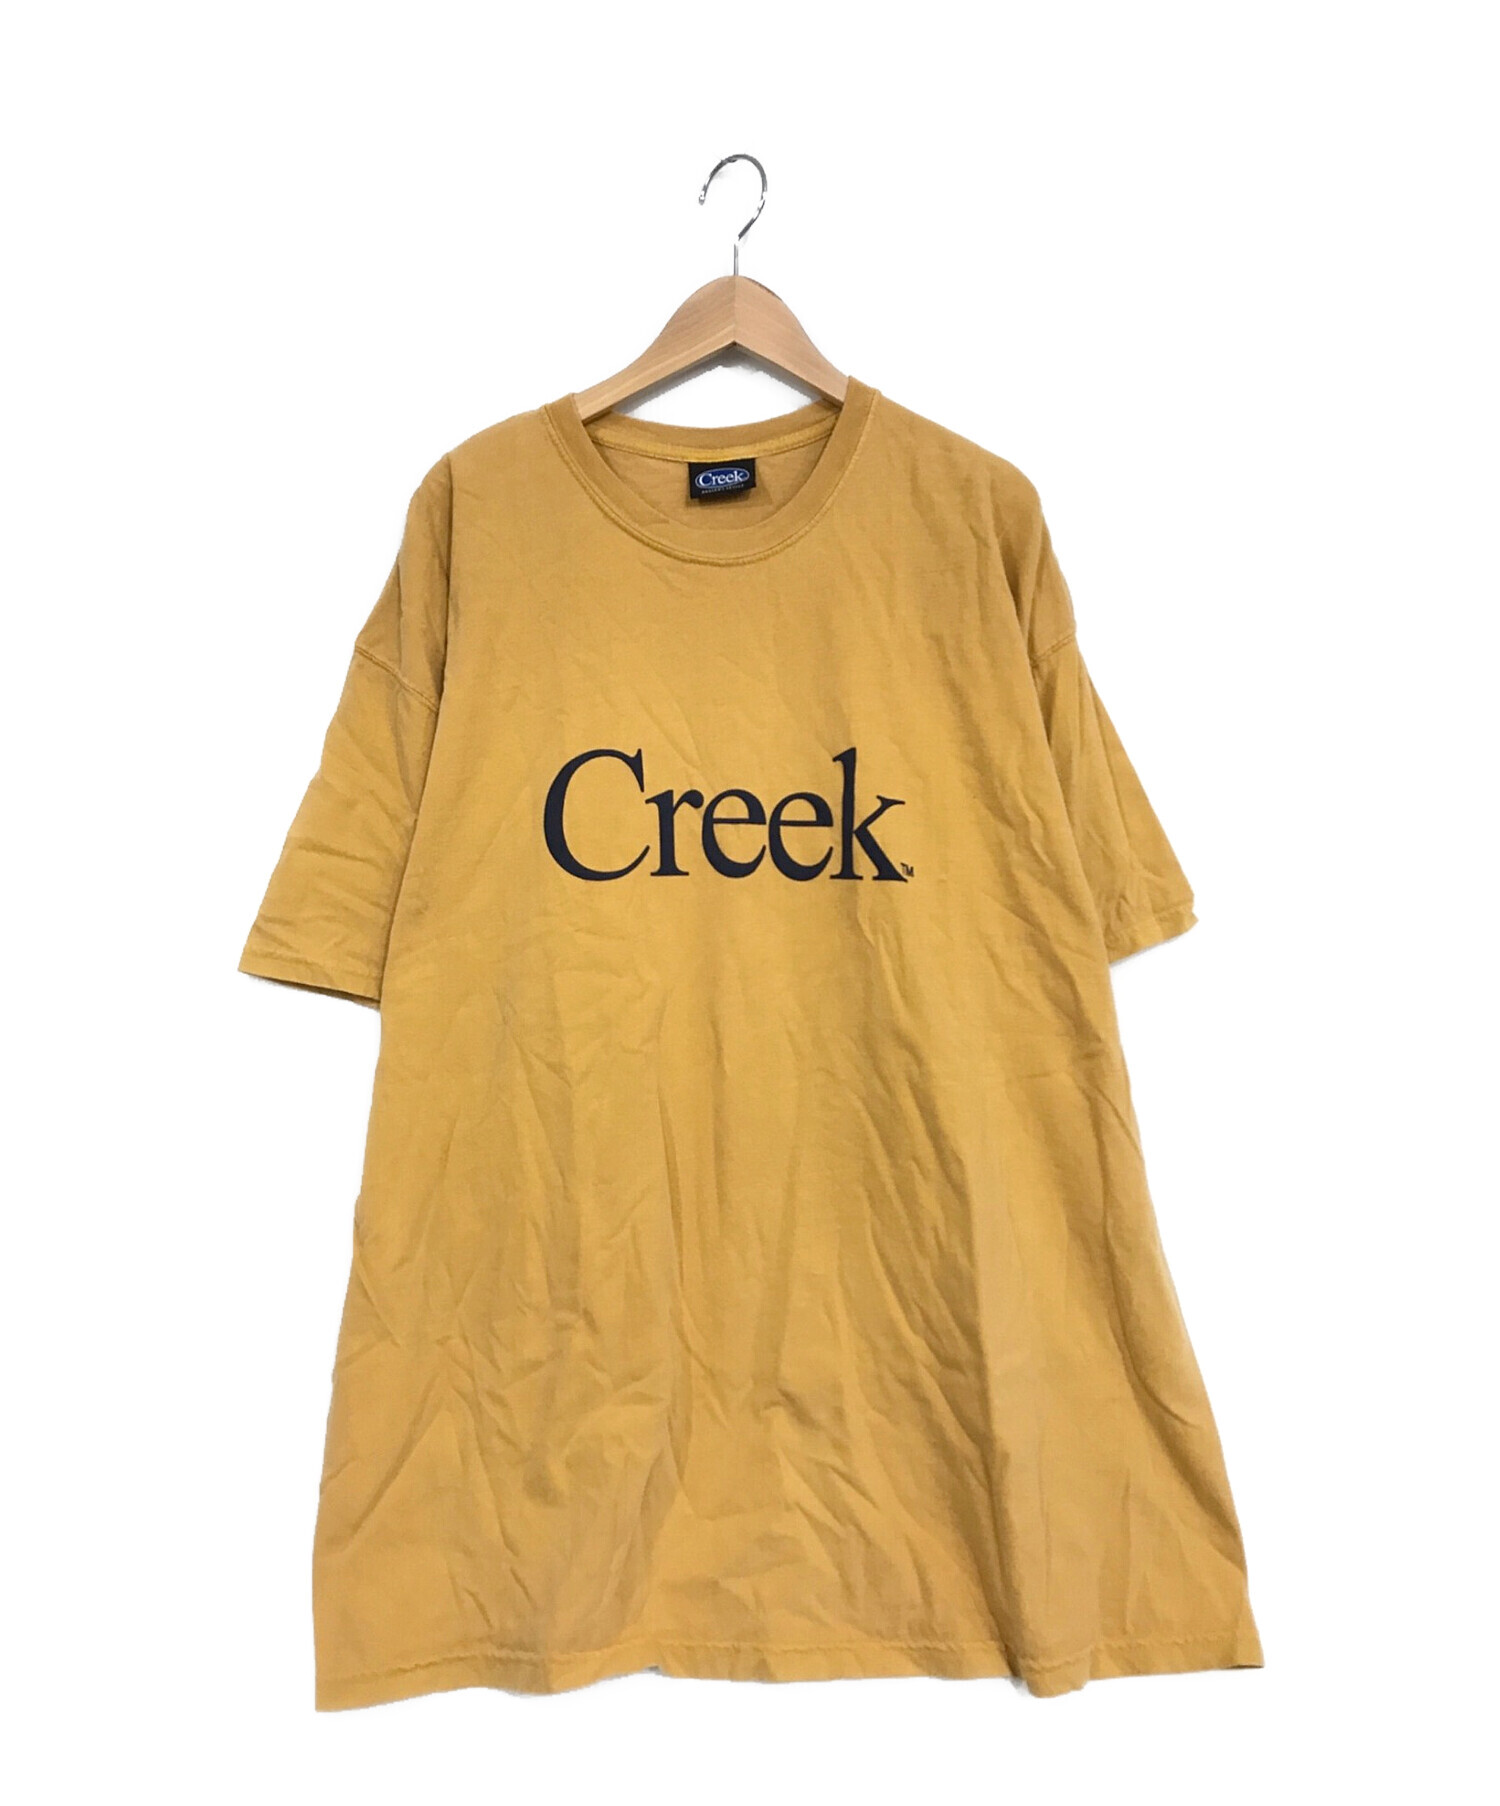 creek angler's device Tシャツ - Tシャツ/カットソー(半袖/袖なし)